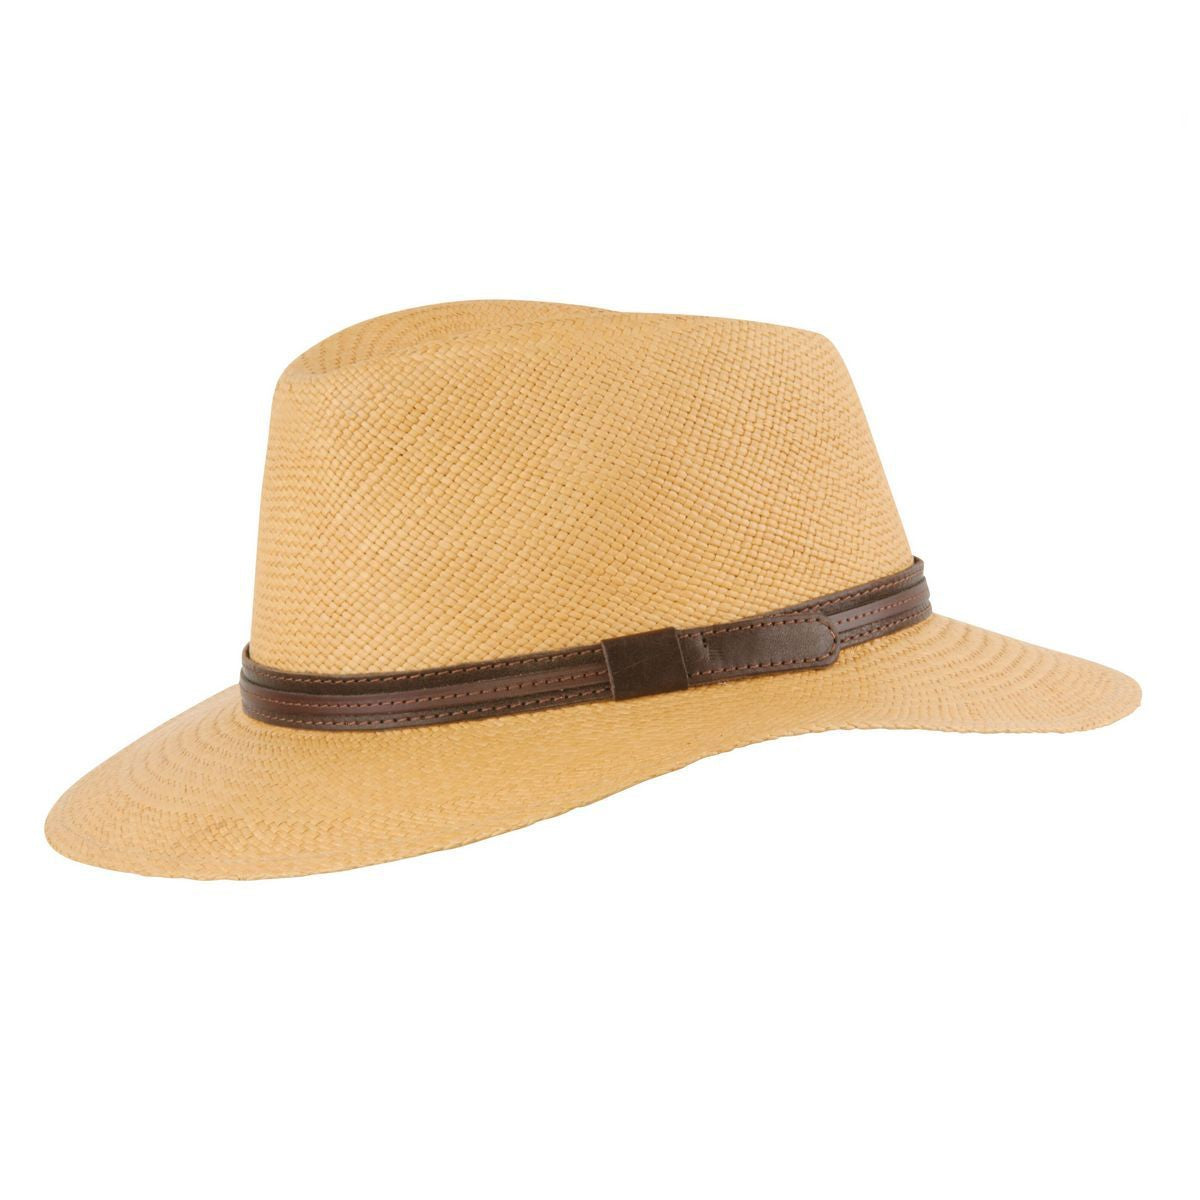 MJM Dude Panama Hat - Biscotto - Hat fra MJM Hats hos The Prince Webshop